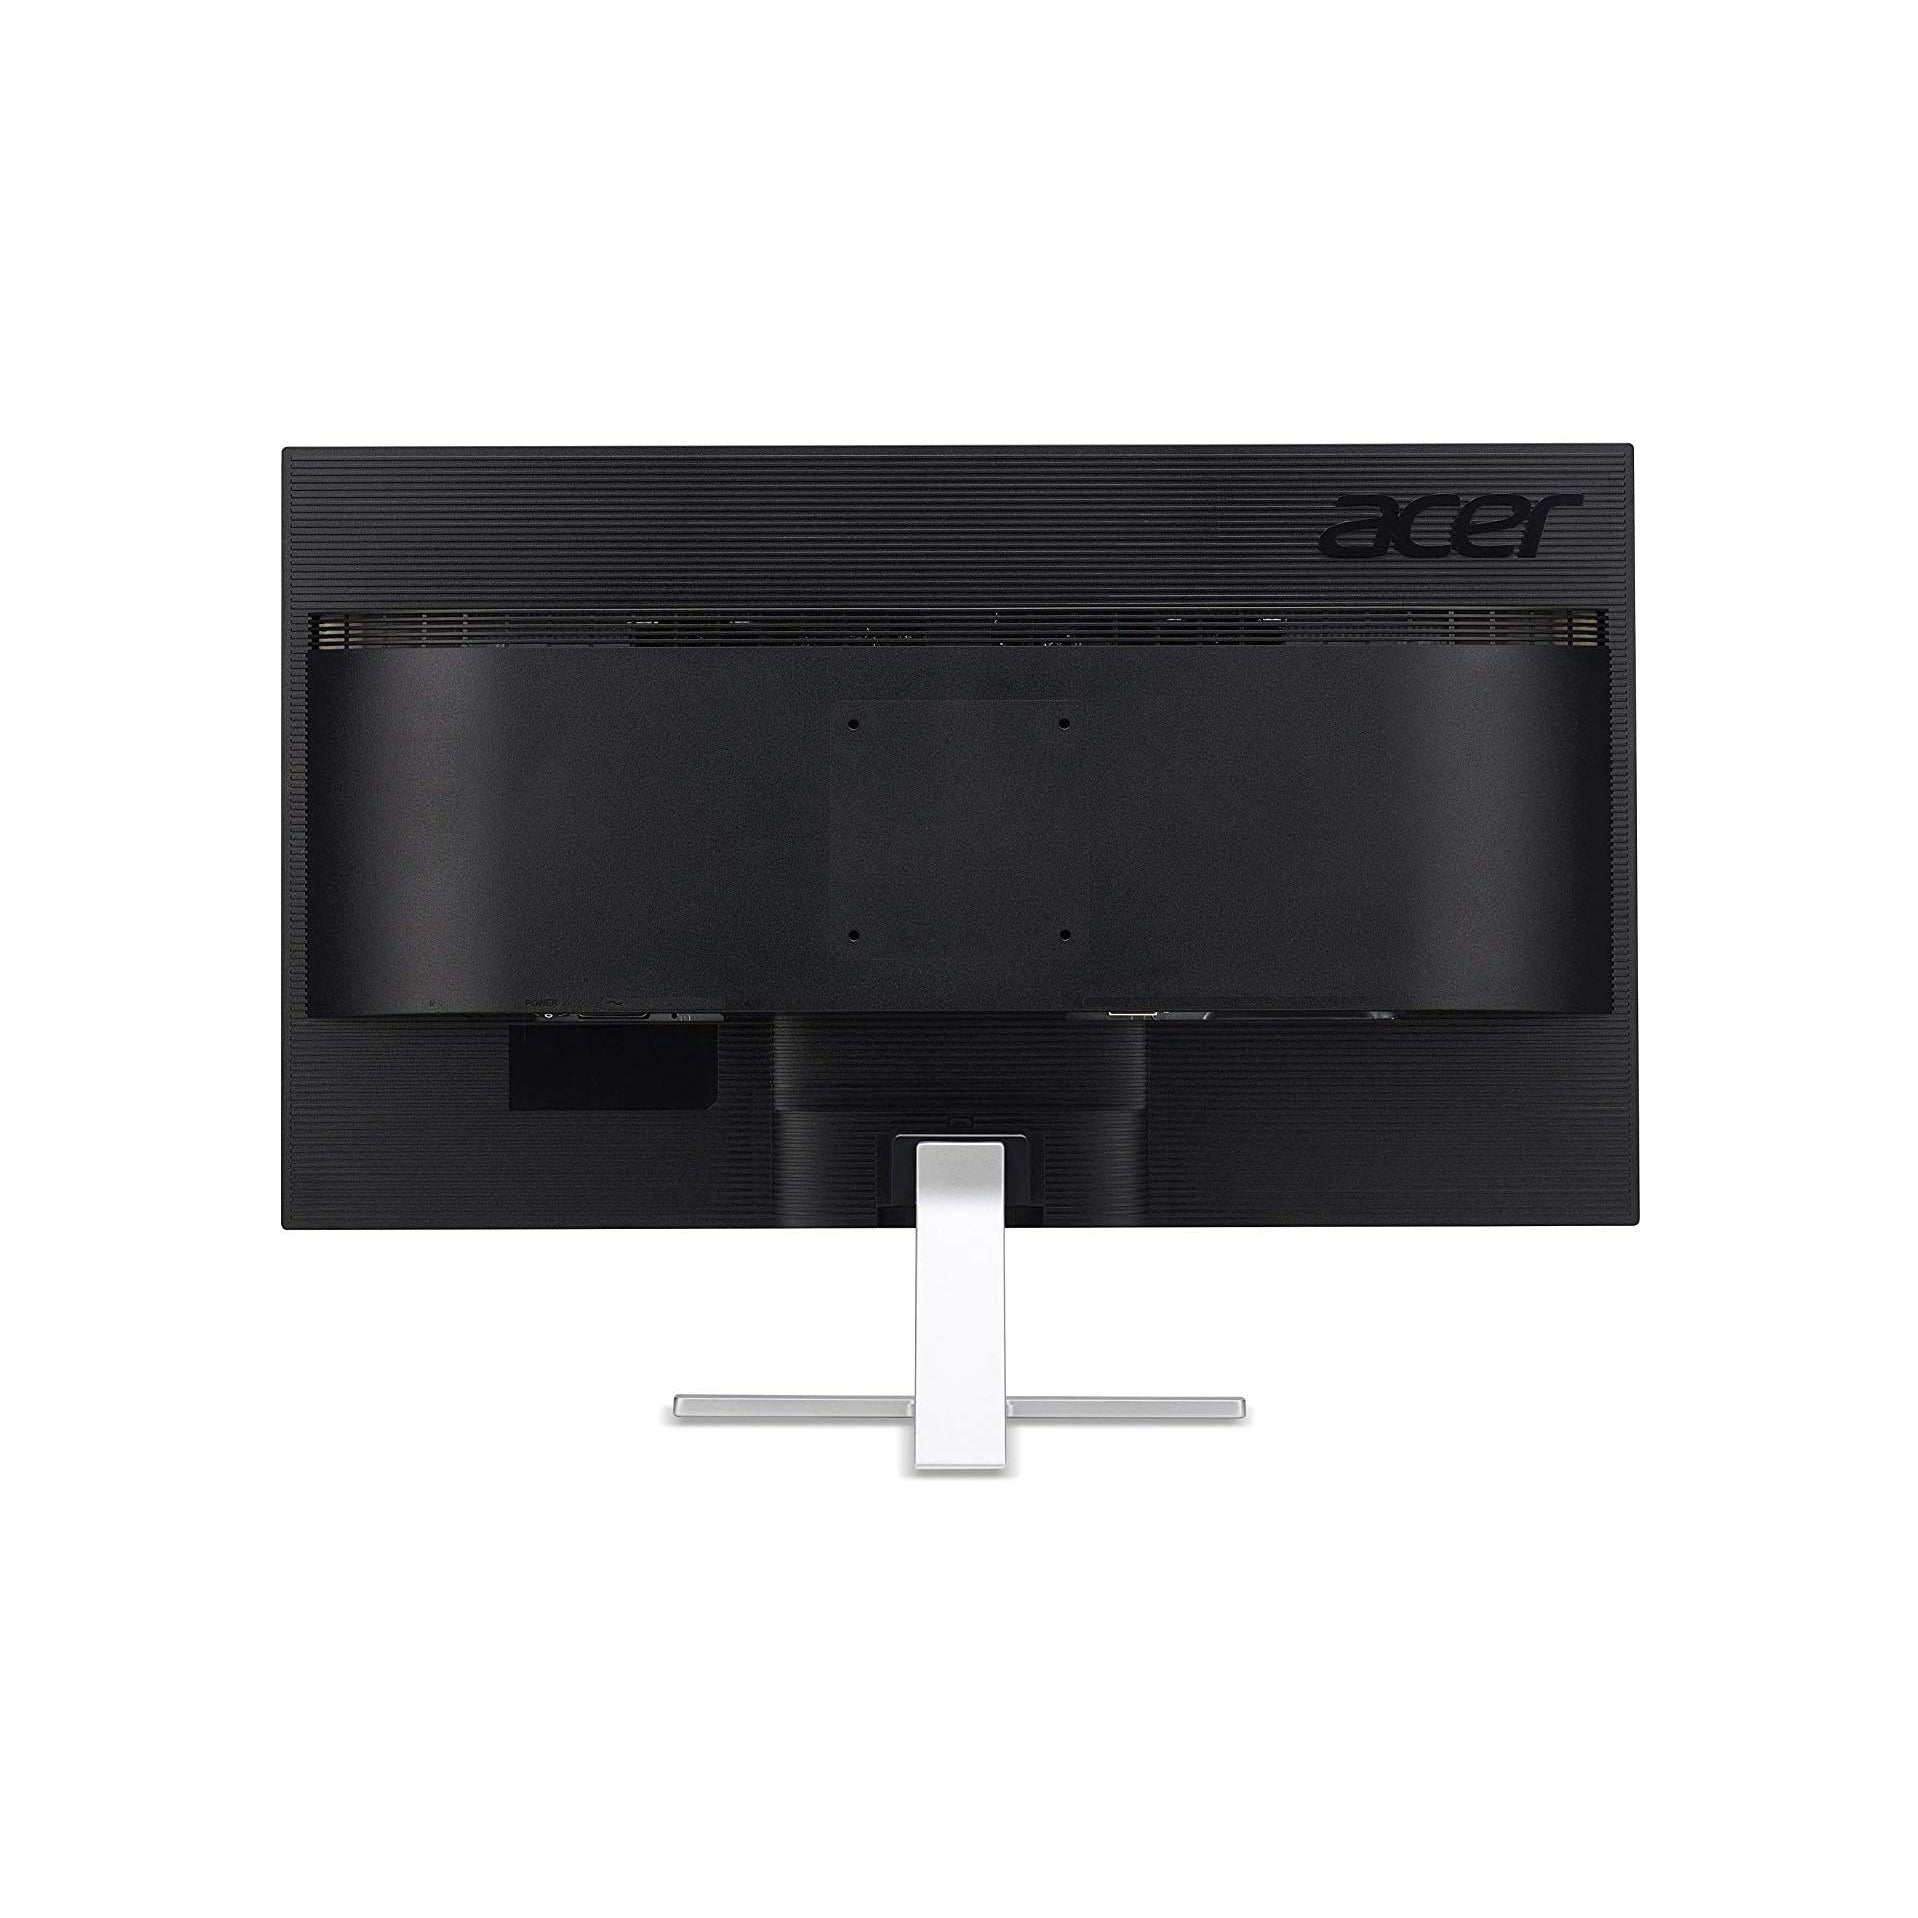 Acer RT280K 28" 4K Ultra HD LCD Monitor - Black